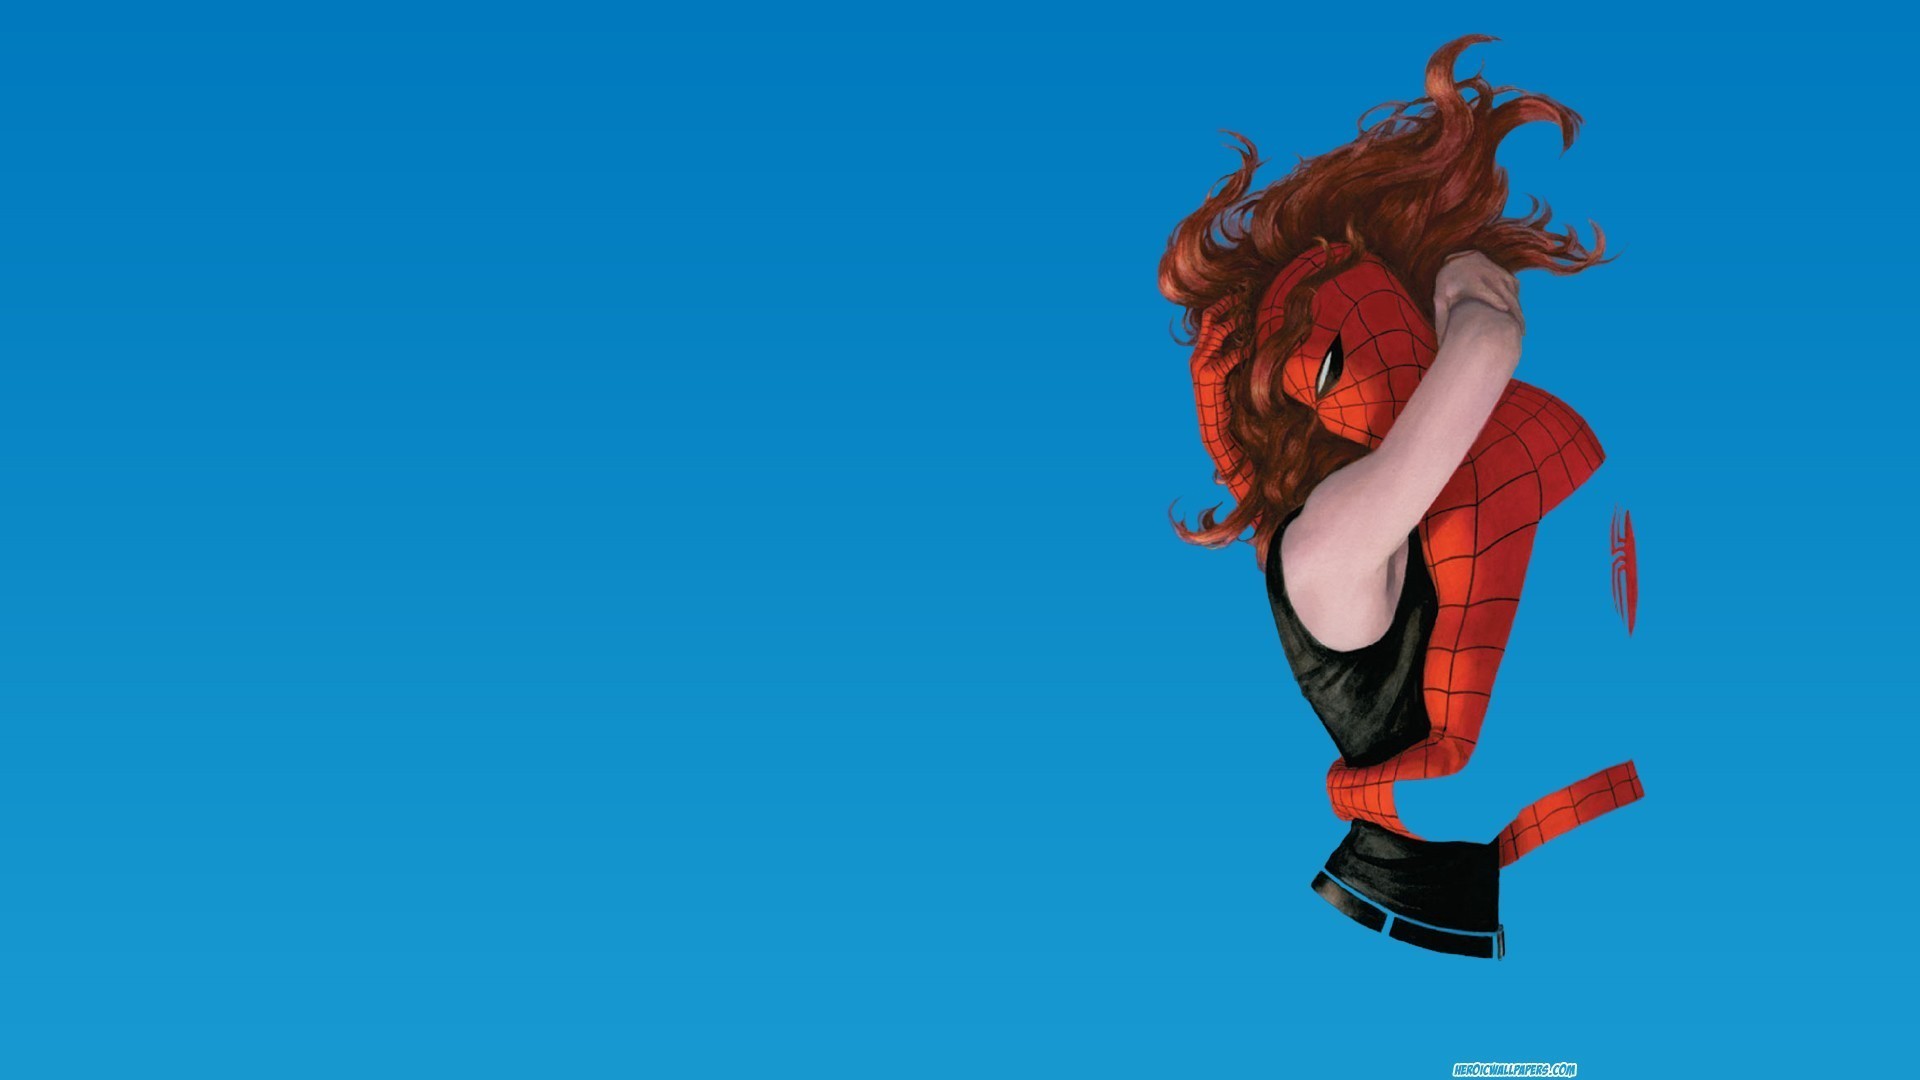 General 1920x1080 Spider-Man Peter Parker Mary Jane Watson artwork blue background gradient long hair hugging superhero comic art